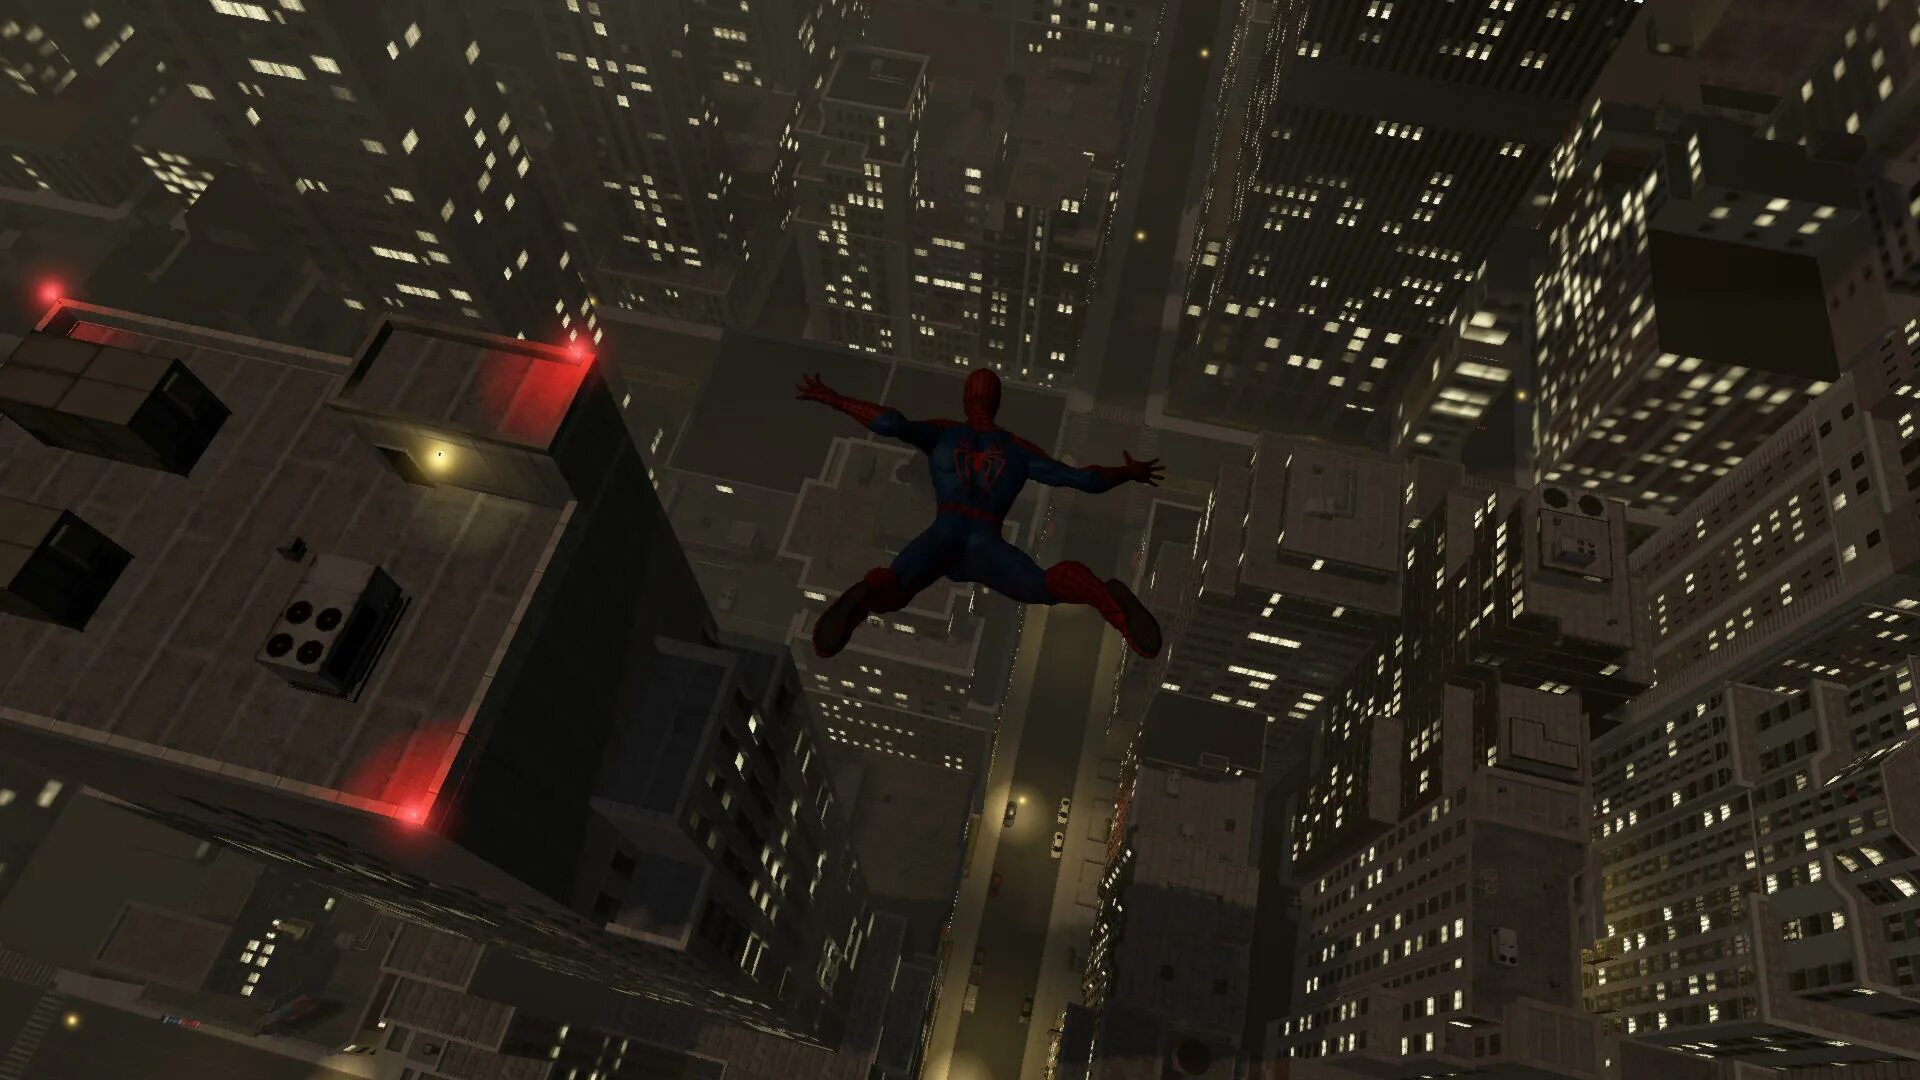 Spider man игра 2012. The amazing Spider-man (игра, 2012). The amazing Spider-man 2 игра. Spider man 2014 игра. Амазинг Спайдермен 2 игра.